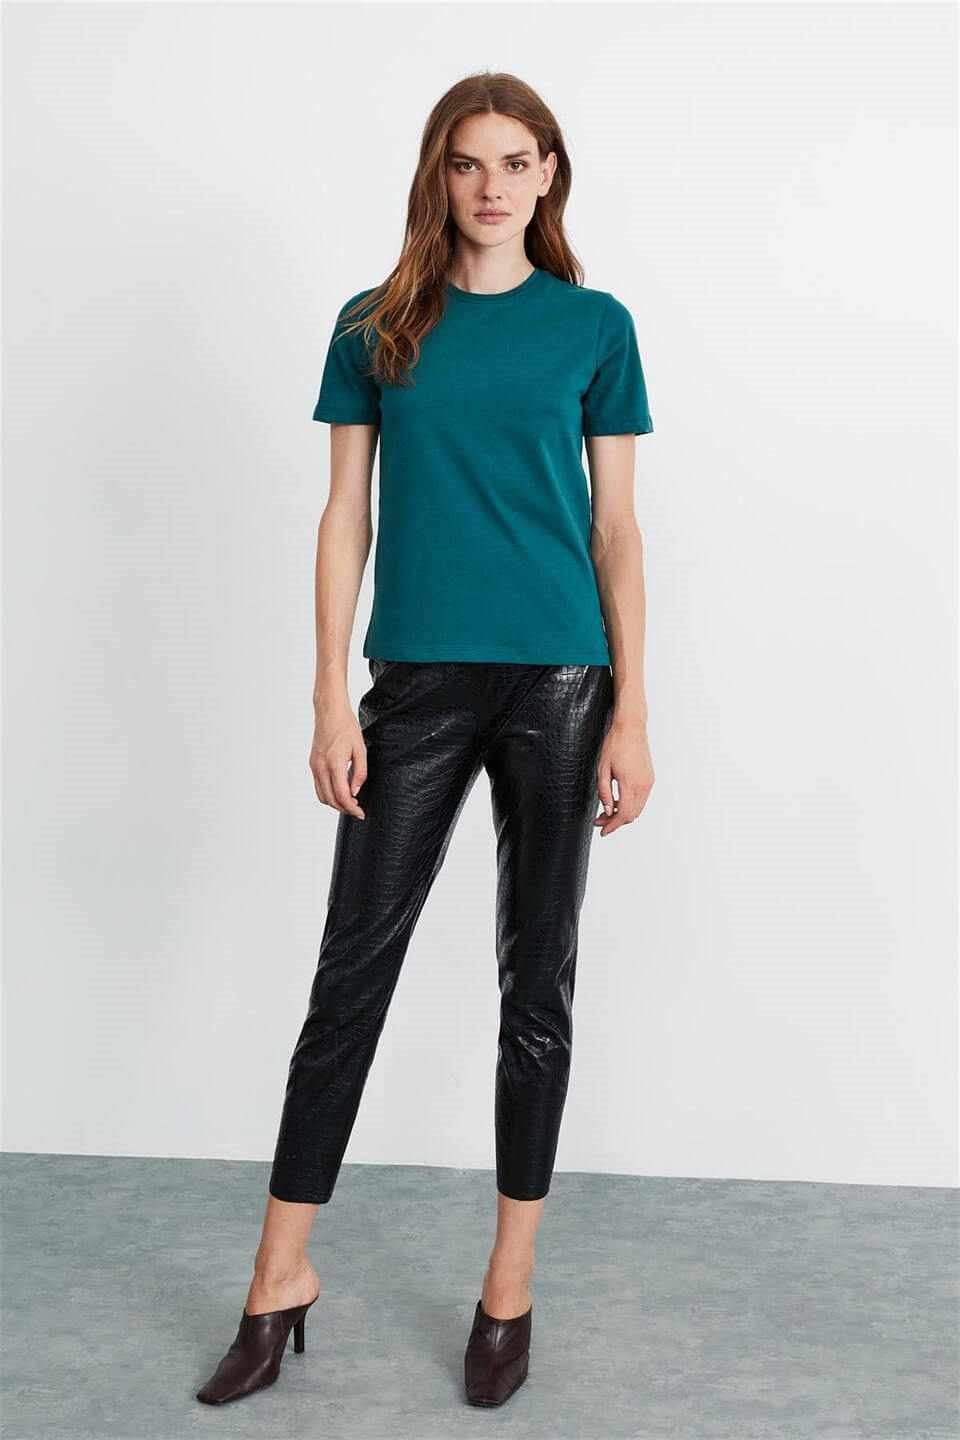 HANNAH Kadın Petrol Yeşili Düz Renk Yuvarlak Yaka Comfort Fit T-Shirt